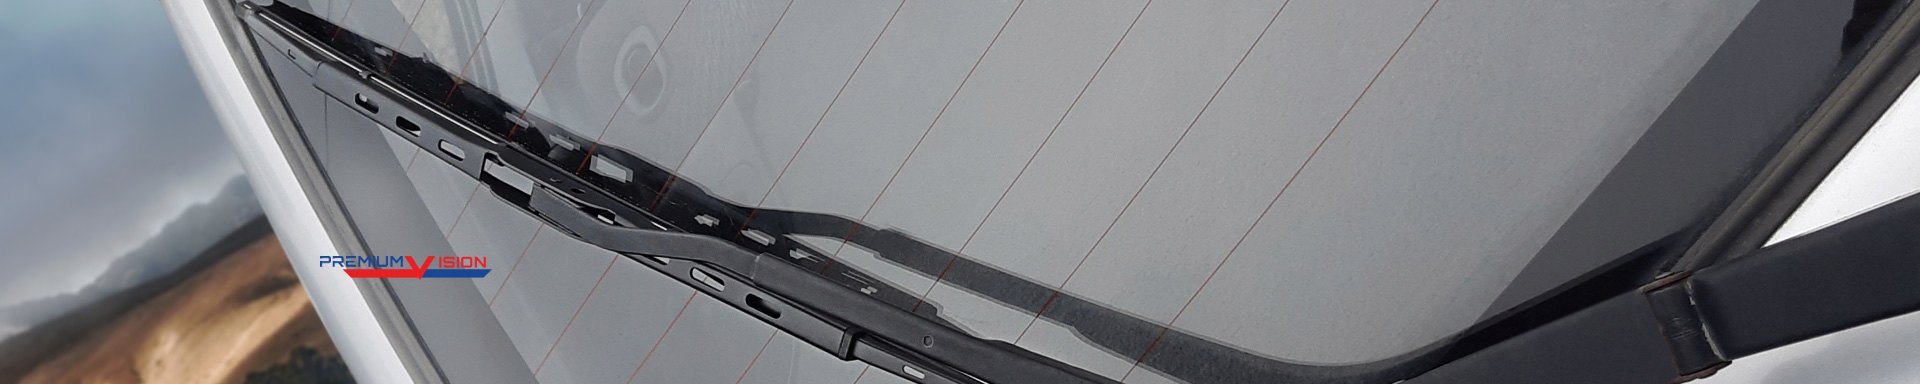 Windshield Wiper Blade-Premium Vision Beam Blade Front Right Pronto OE19